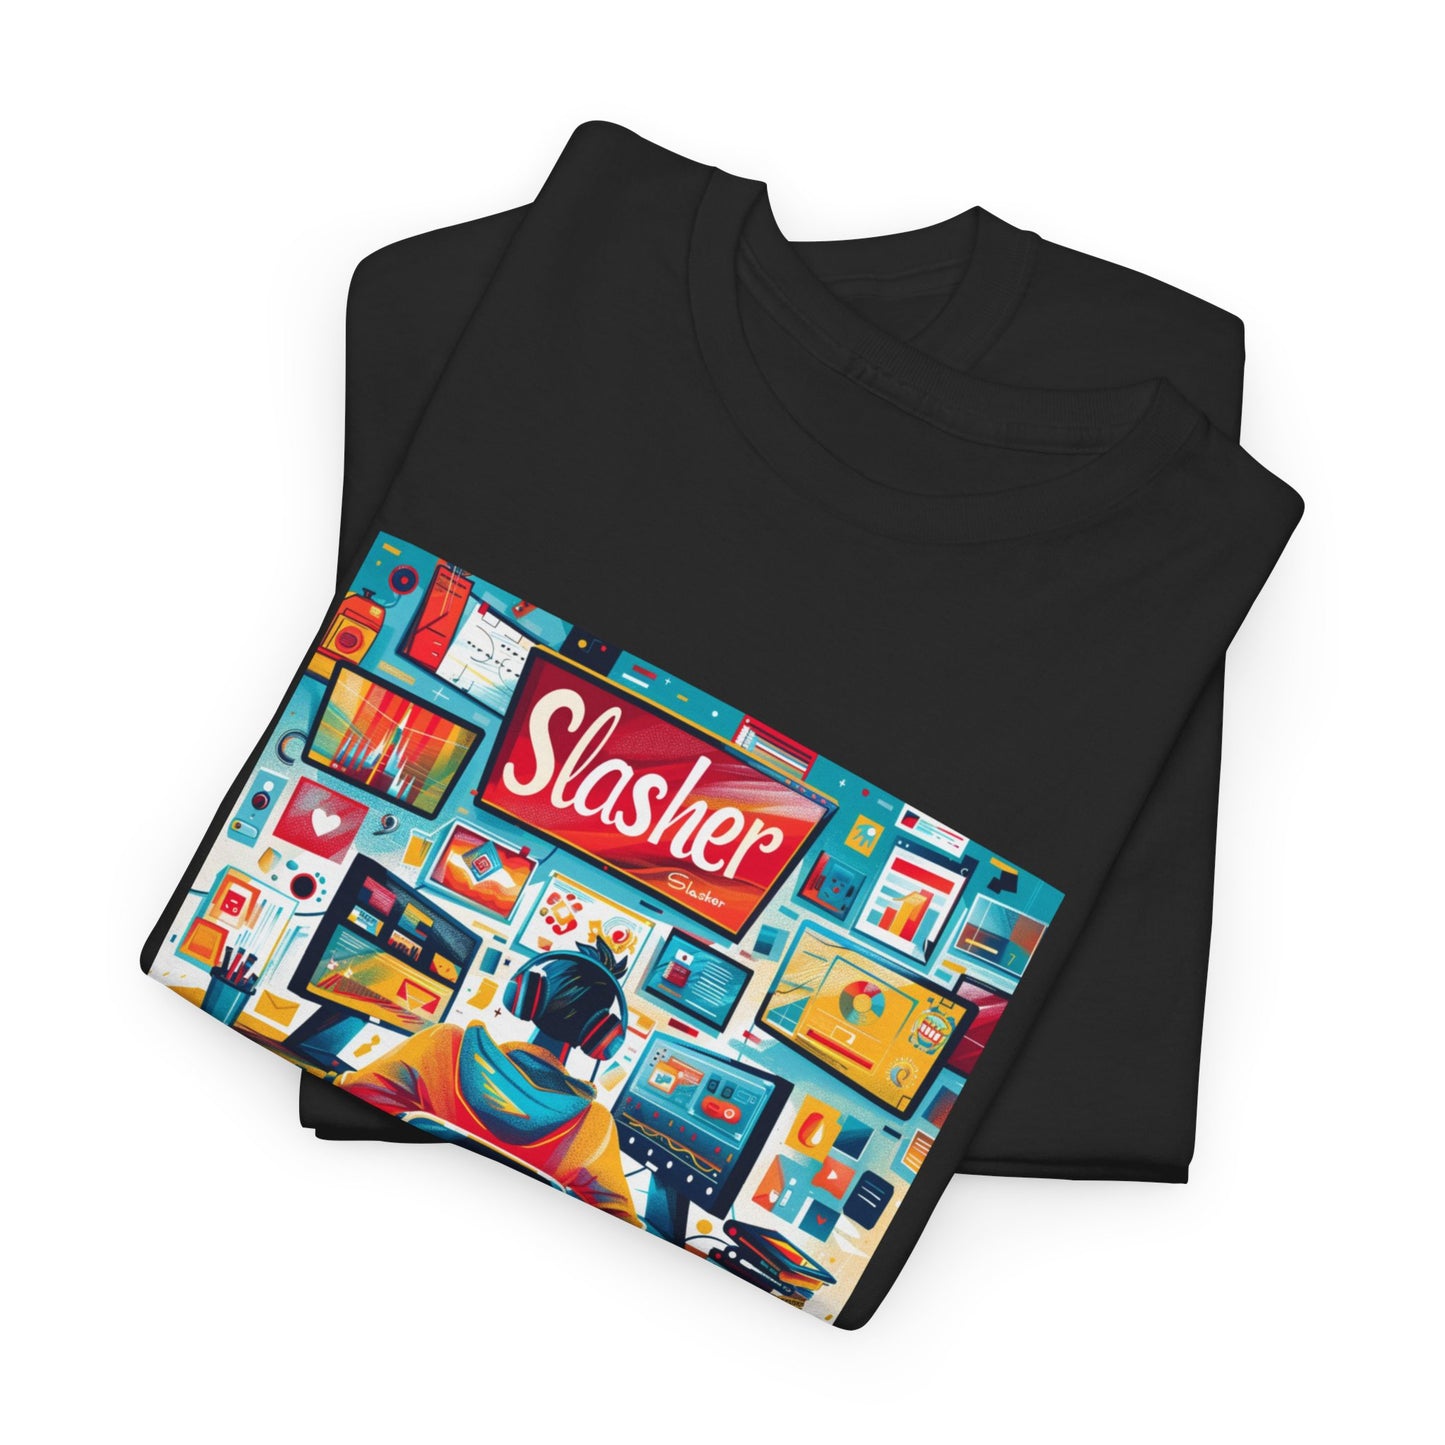 Slasher T-shirt